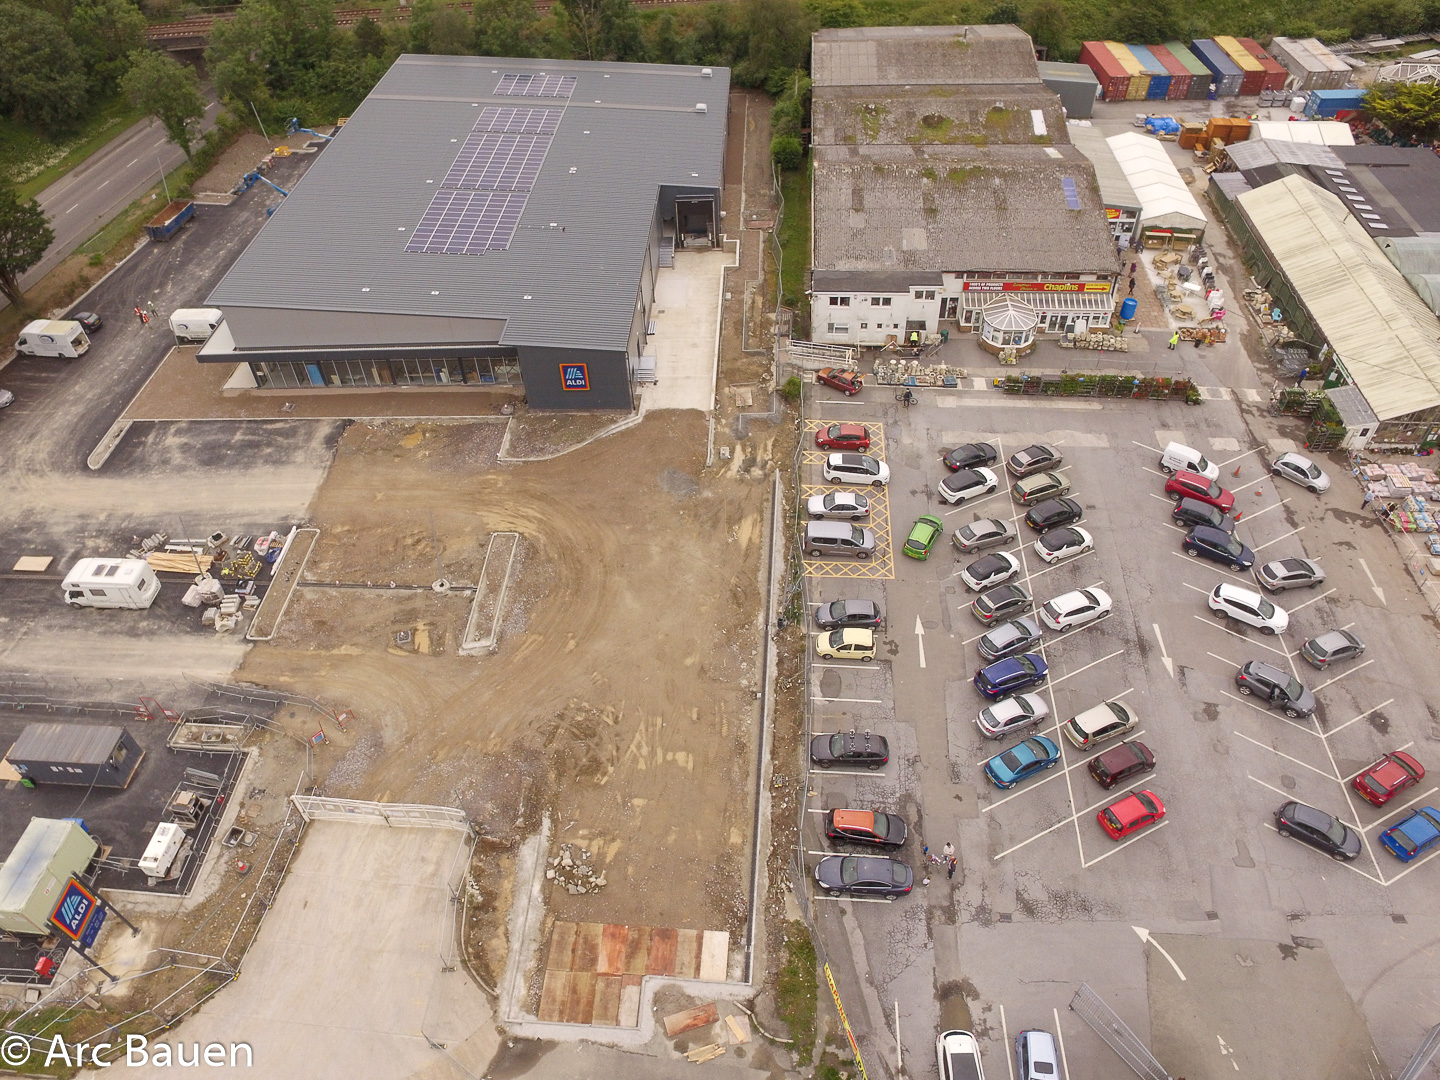 Aldi Plympton site progress photos from a drone 18.06.20